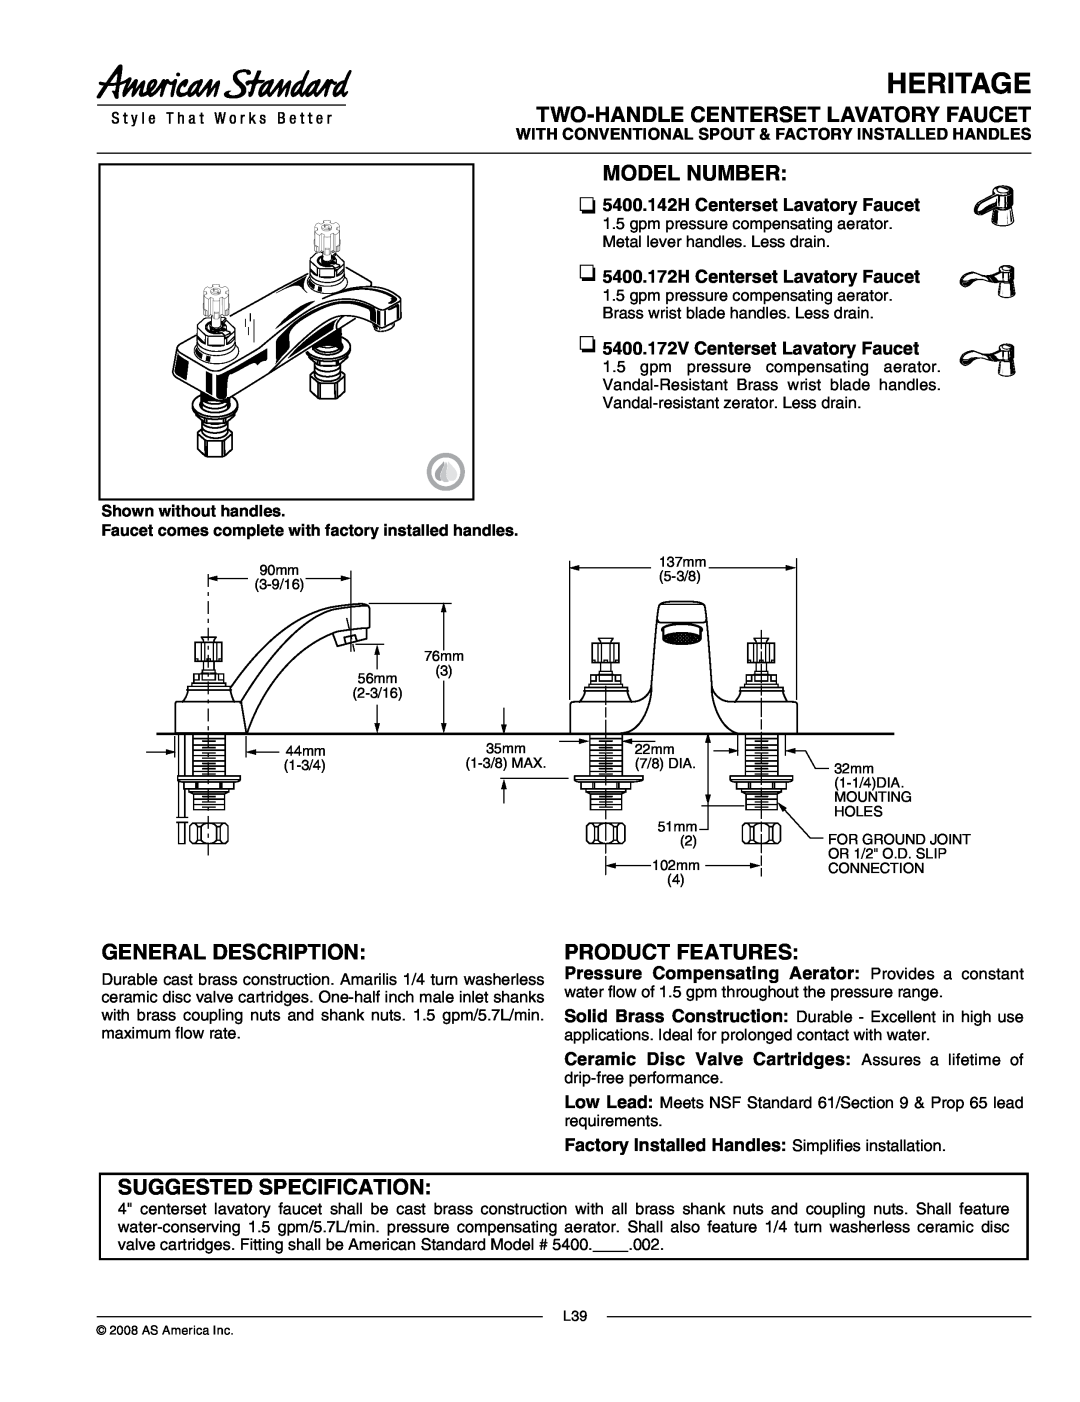 American Standard 5400.142H manual Heritage, Two-Handlecenterset Lavatory Faucet, Model Number, General Description 